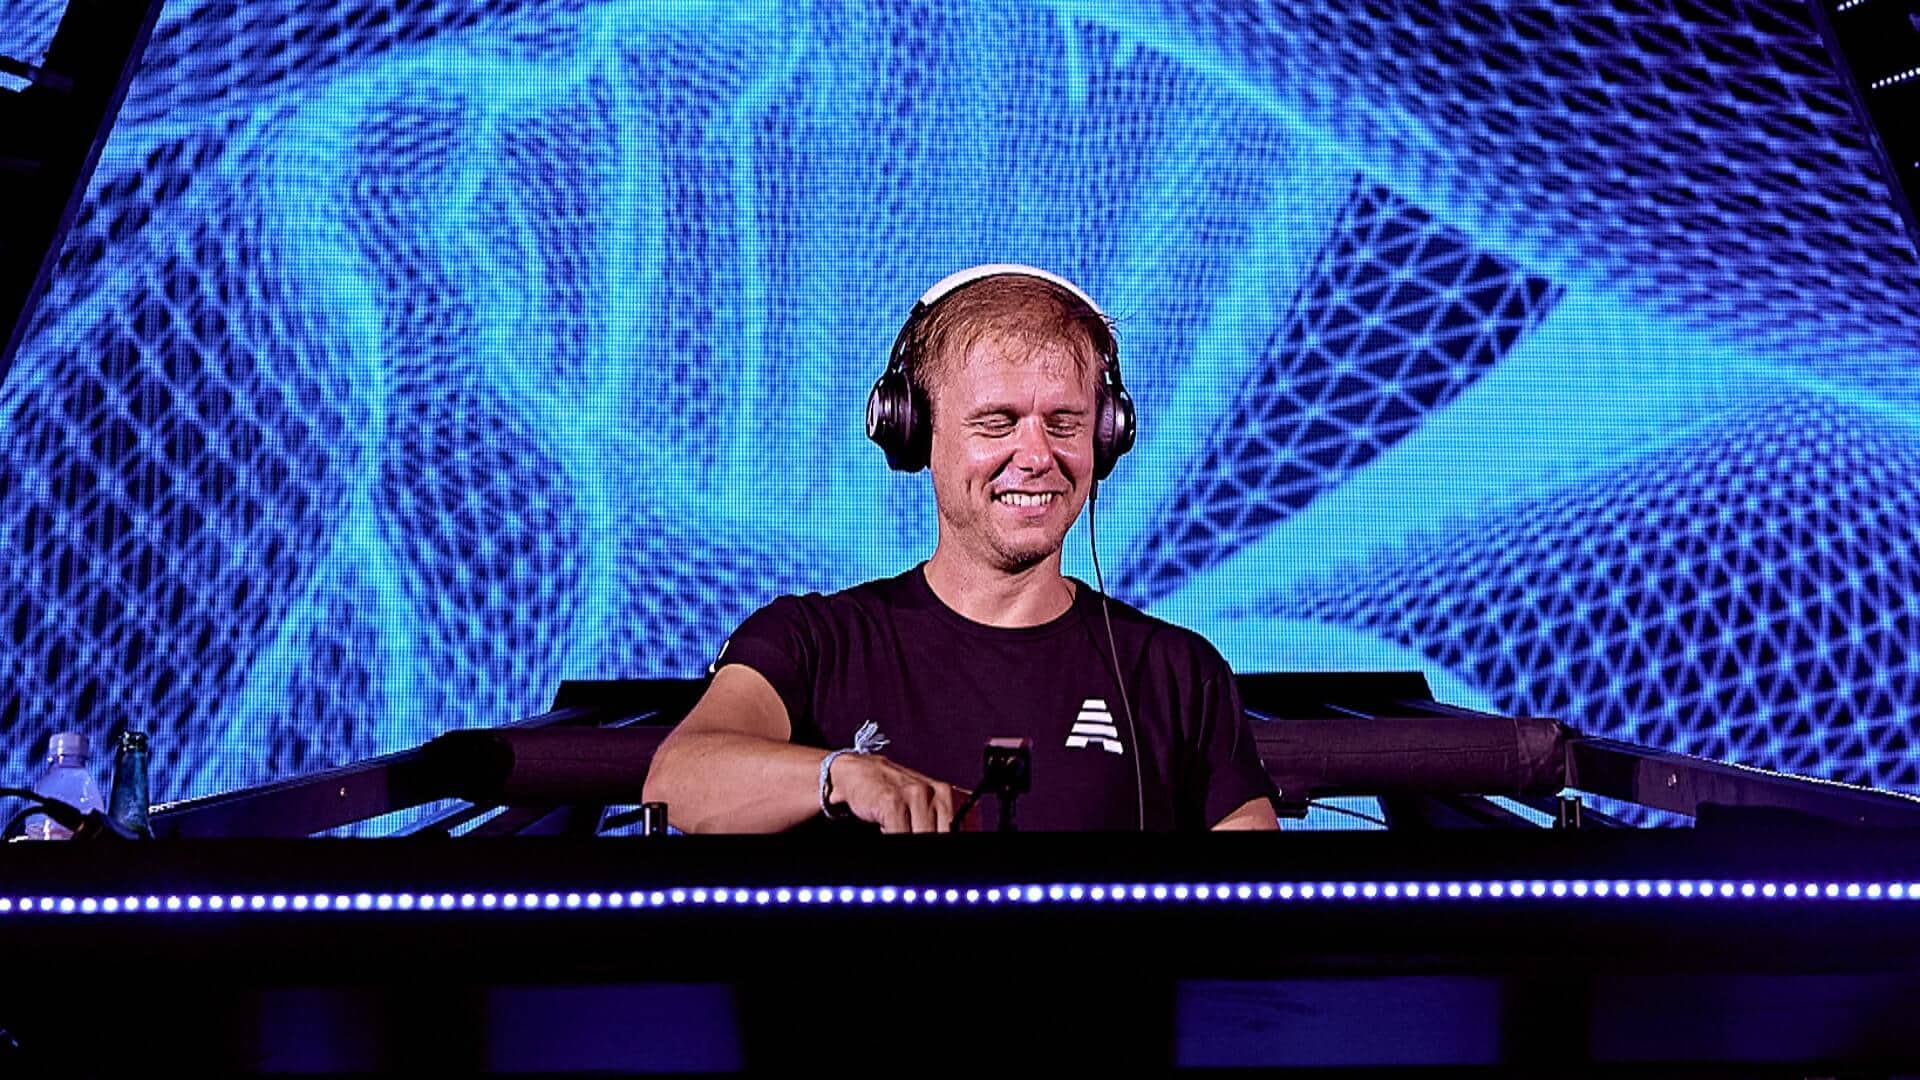 Armin van Buuren puts us in a trance with Tomorrowland 31.12.2020 set